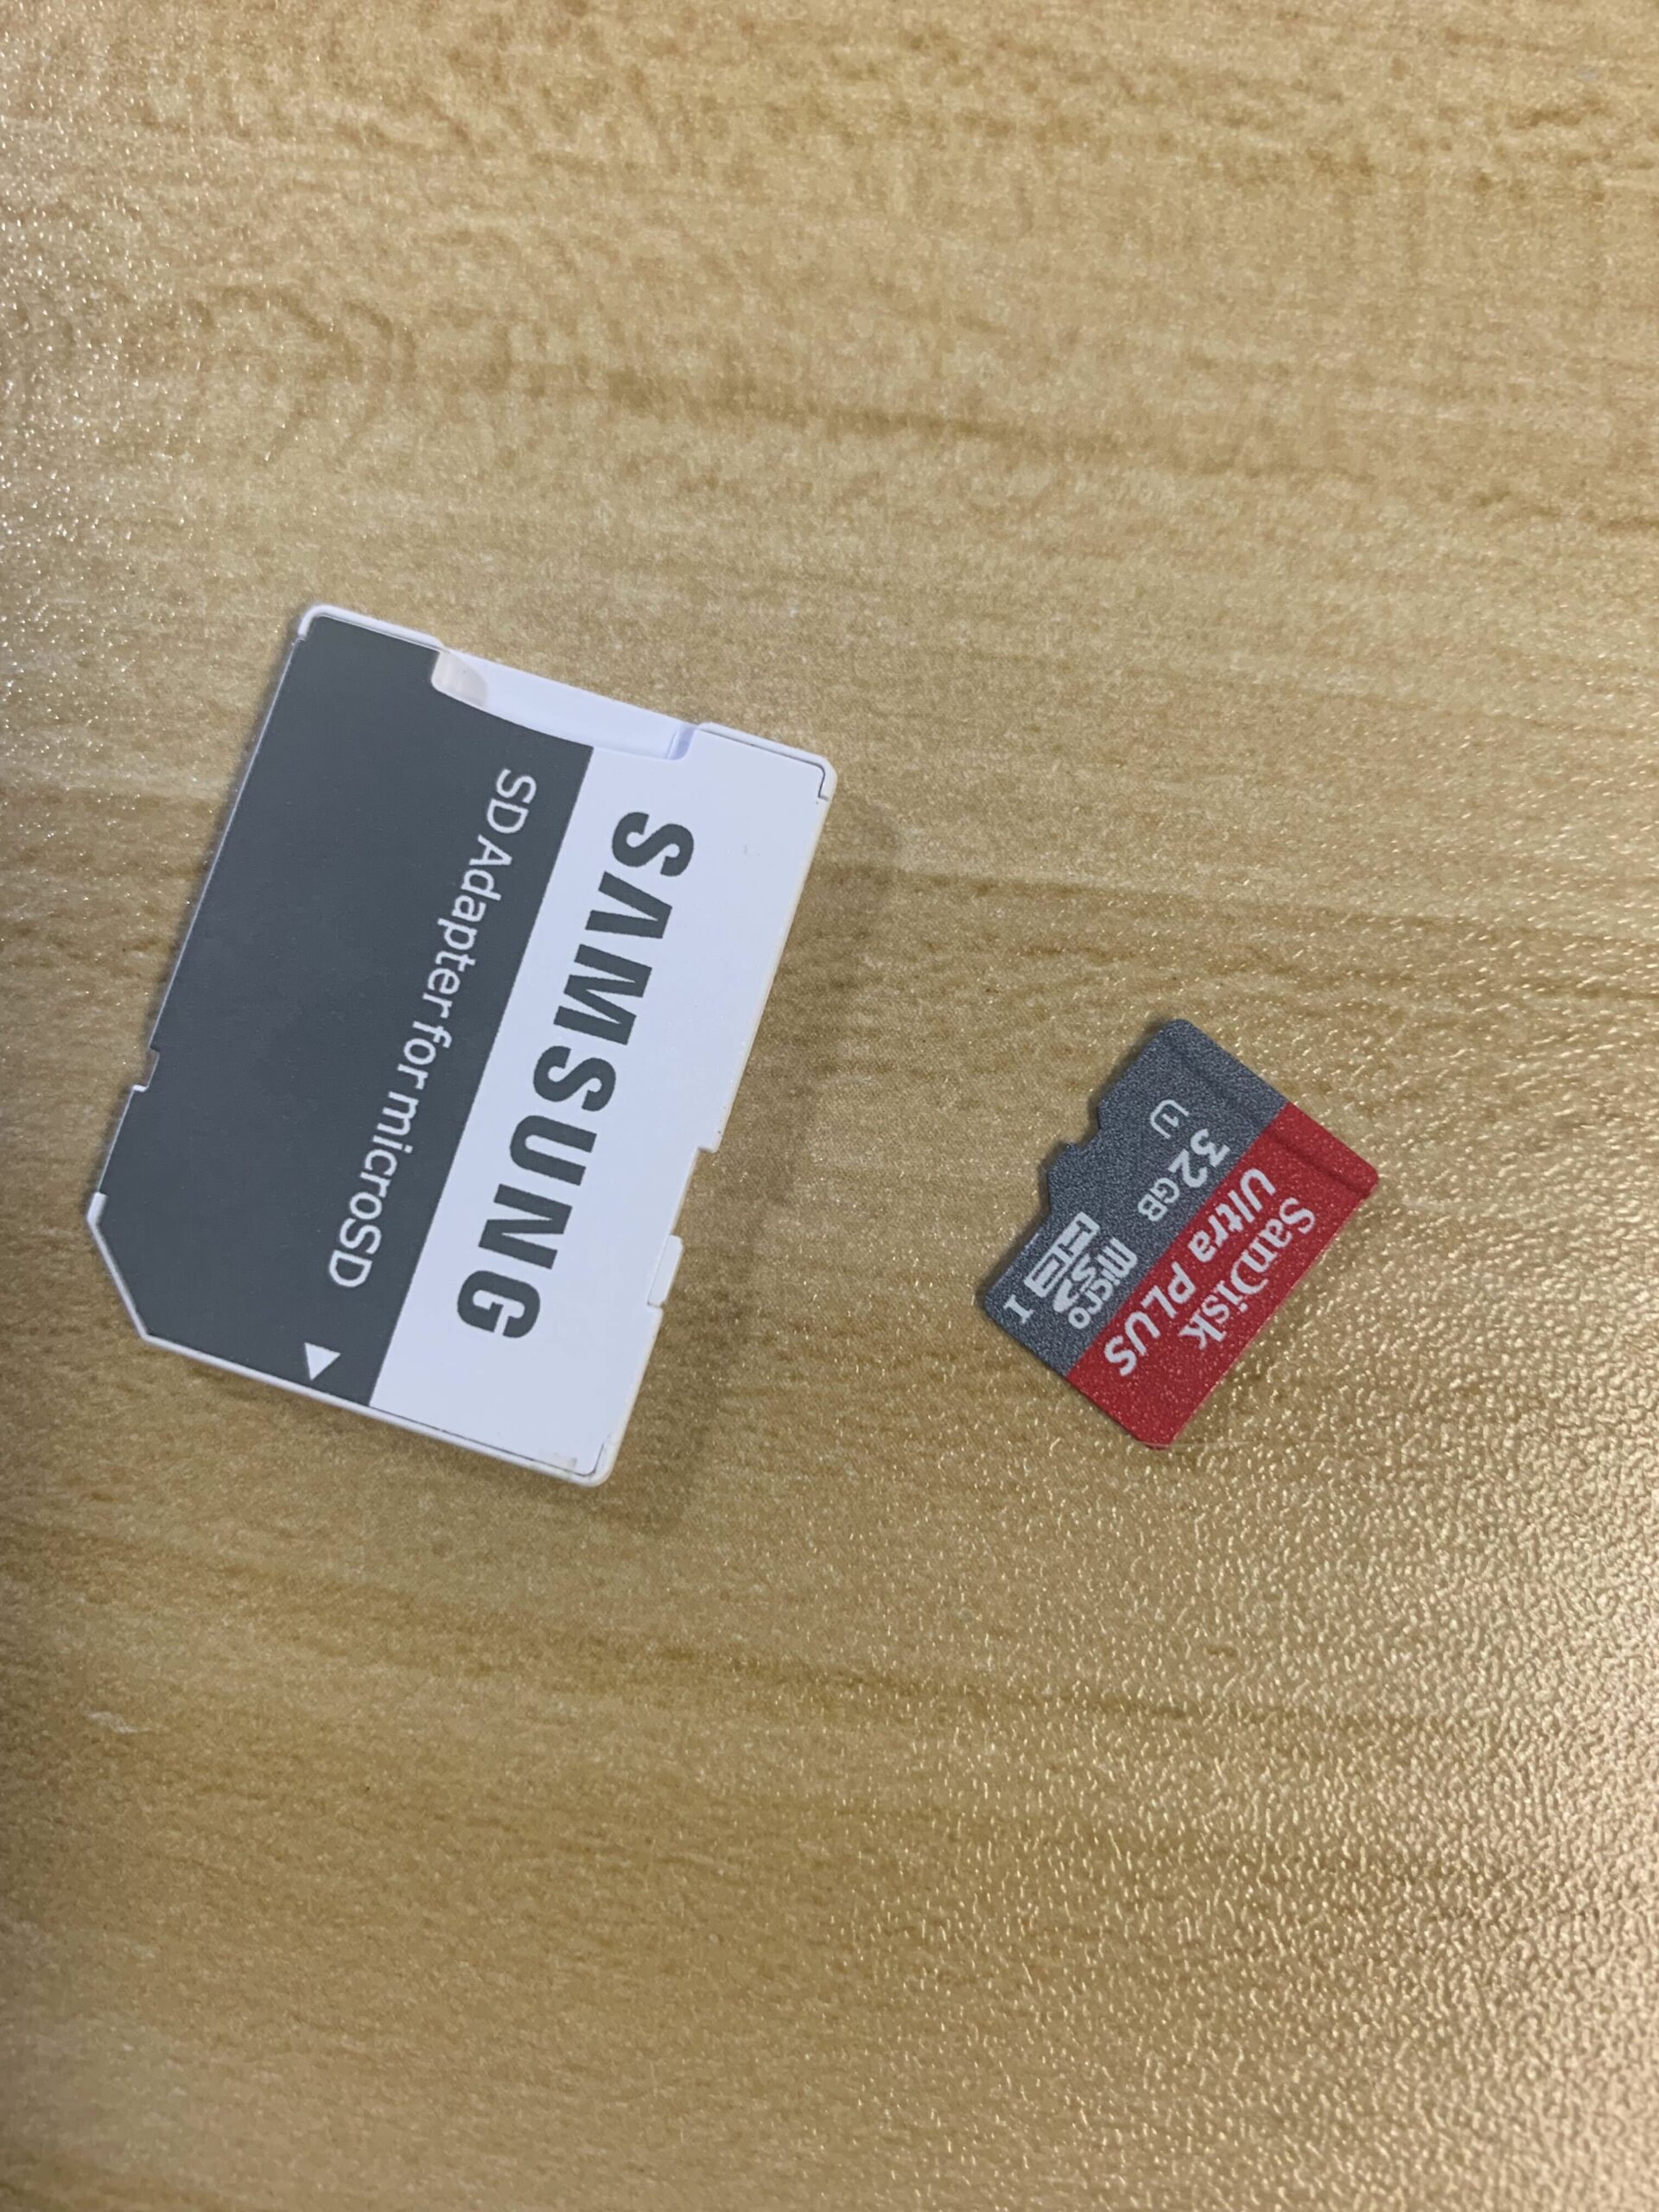 Sandisk Ultra Plus micro_SD memory card